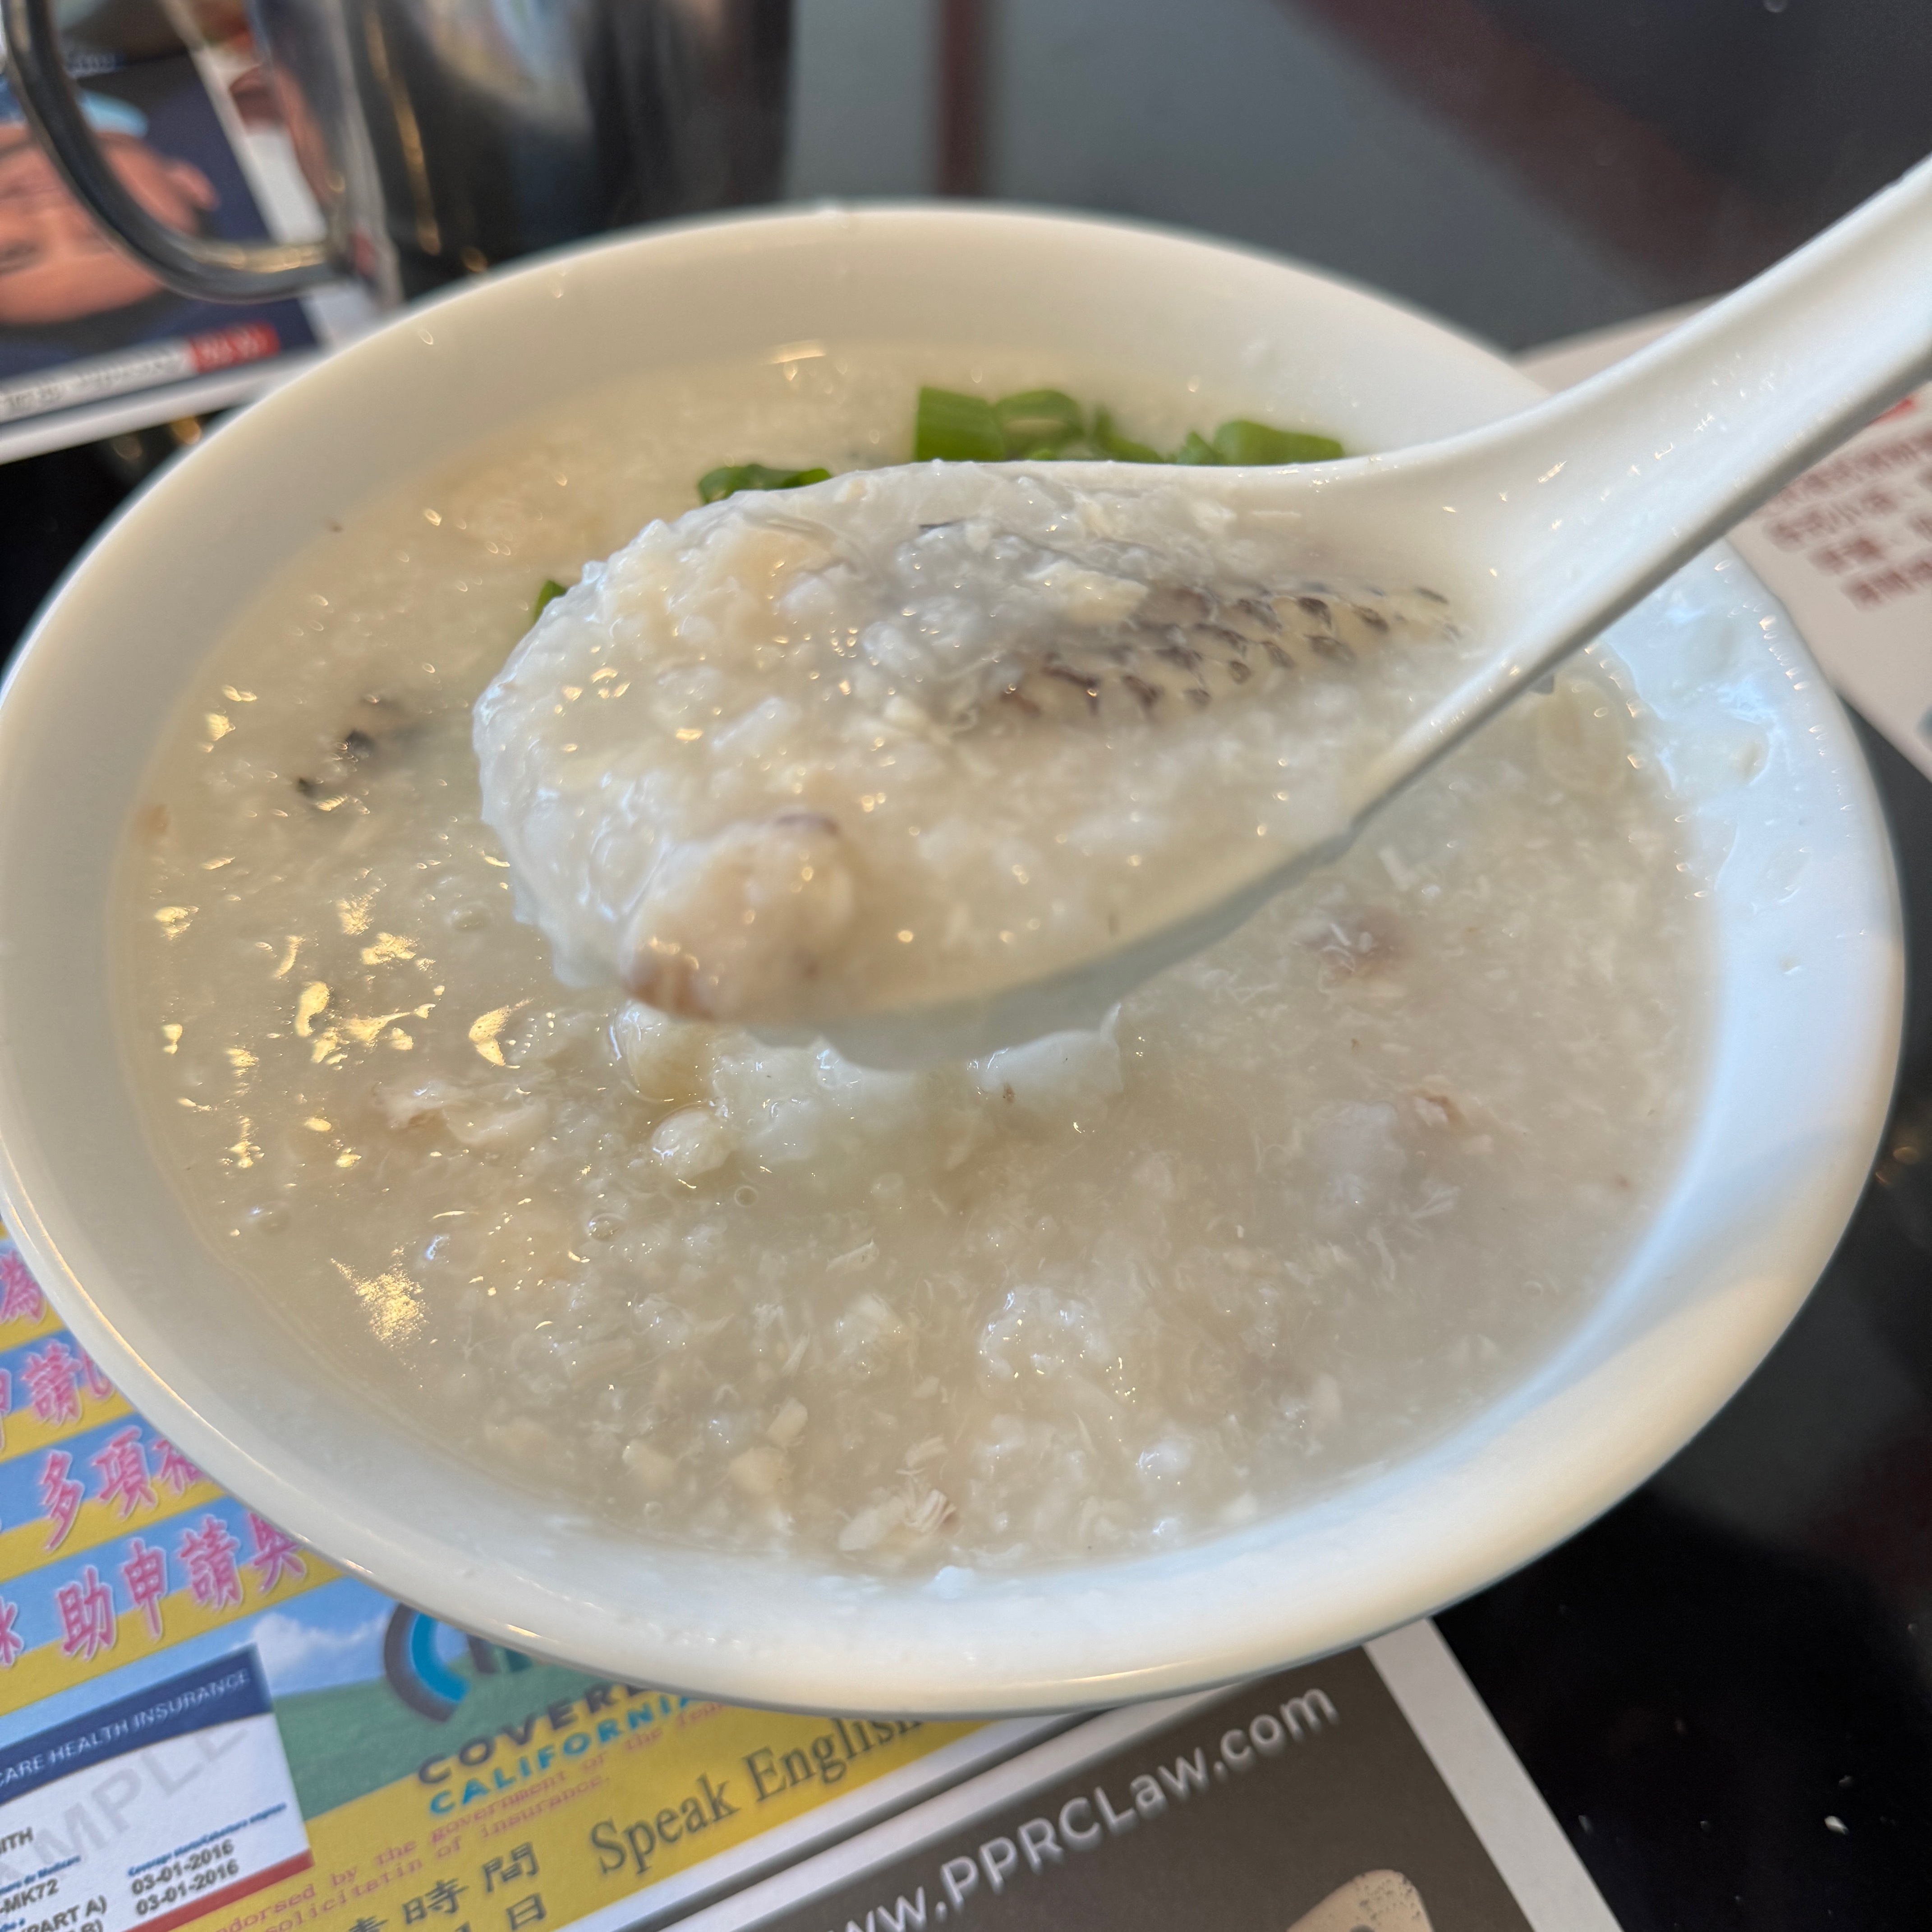 Fresh Fish Porridge with Peanuts from Ho Kee Cafe on #foodmento http://foodmento.com/dish/53573